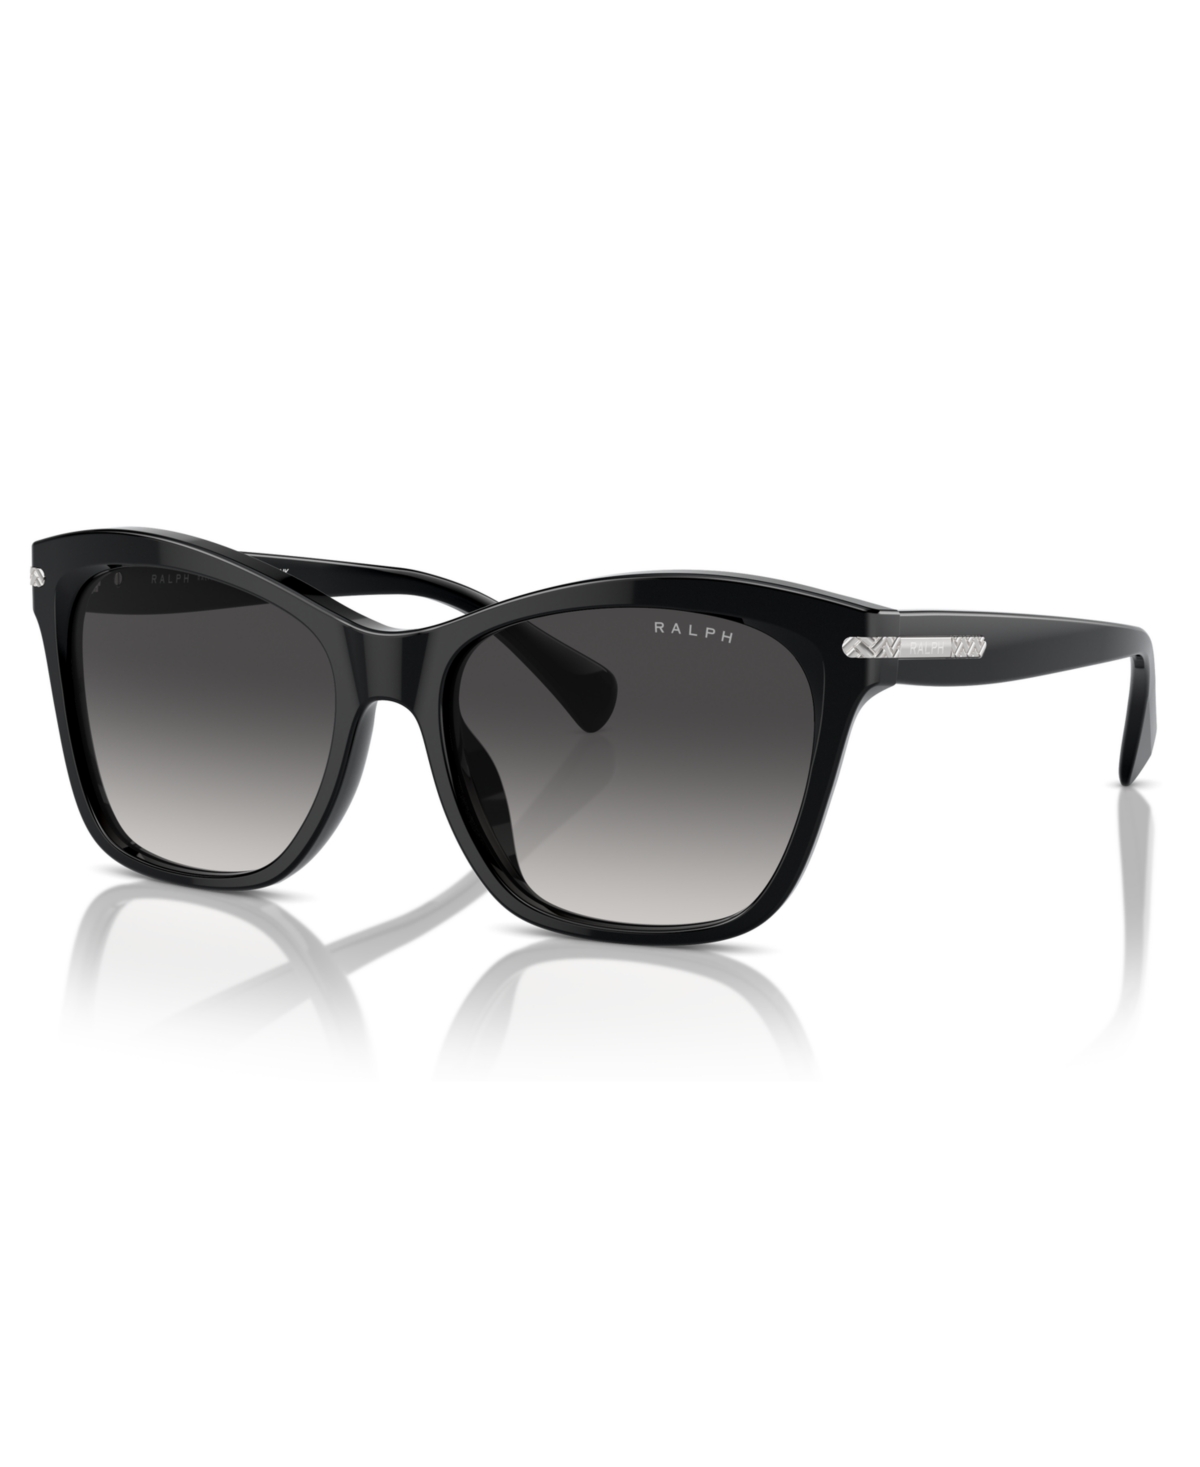 Women's Sunglasses, Ra5310U - Shiny Dark Havana